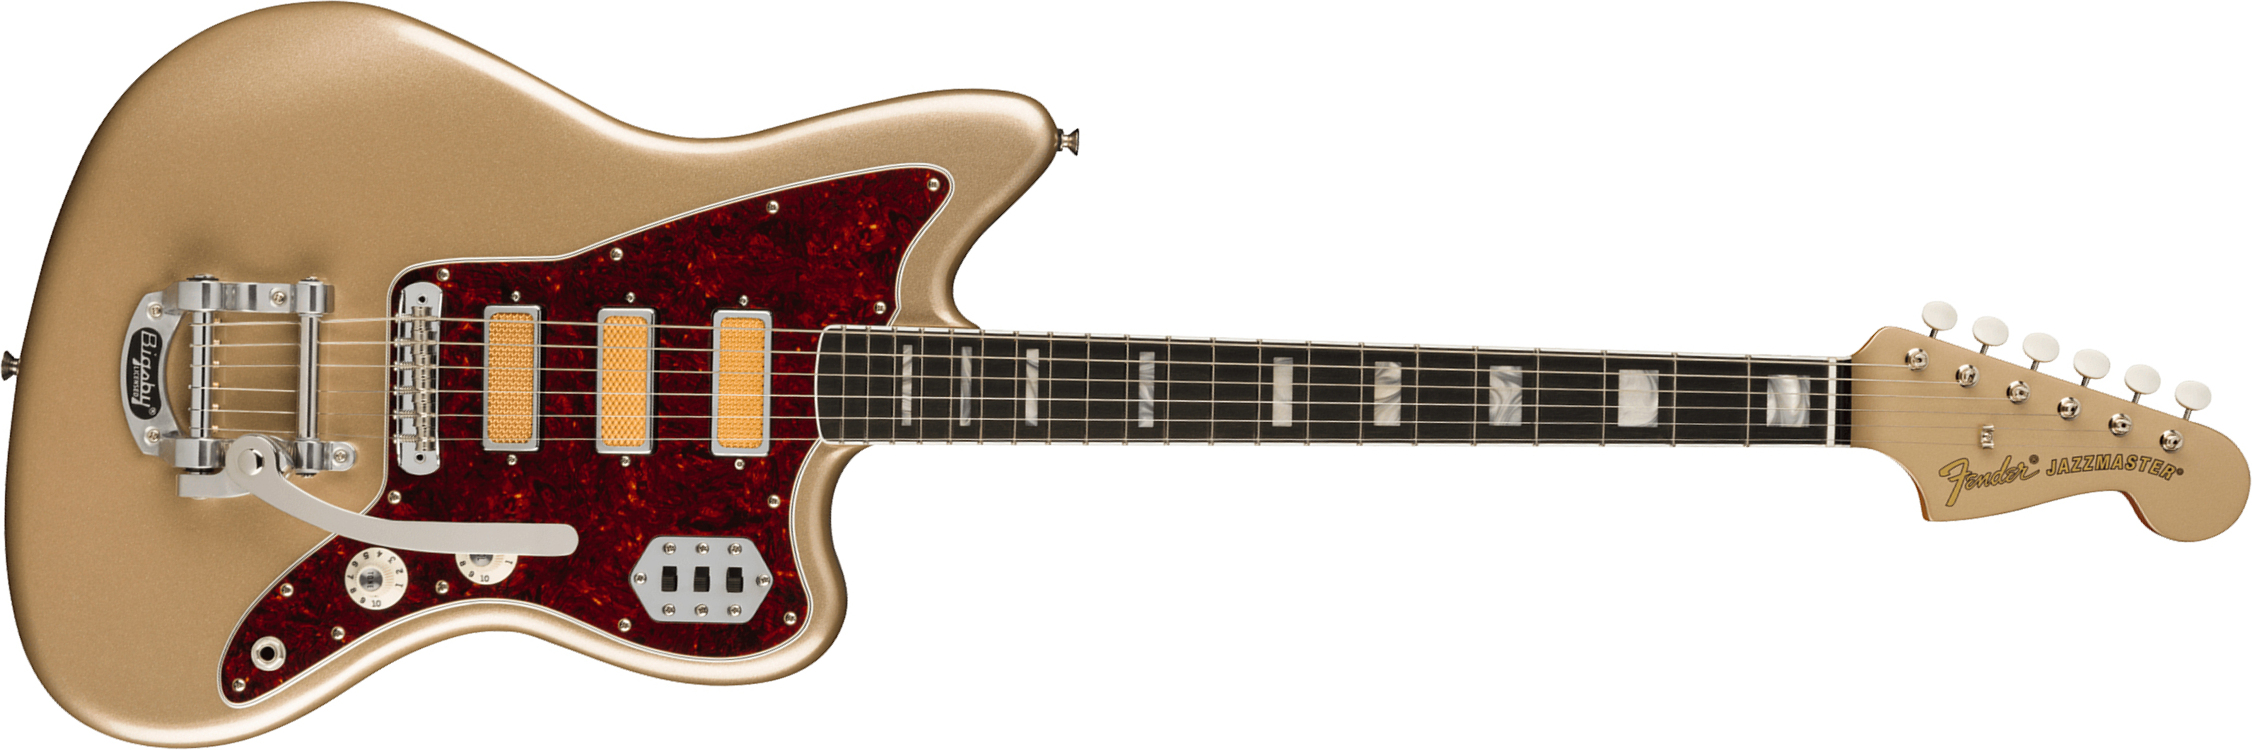 Fender Jazzmaster Gold Foil Ltd Mex 3mh Trem Bigsby Eb - Shoreline Gold - Retro-Rock-E-Gitarre - Main picture